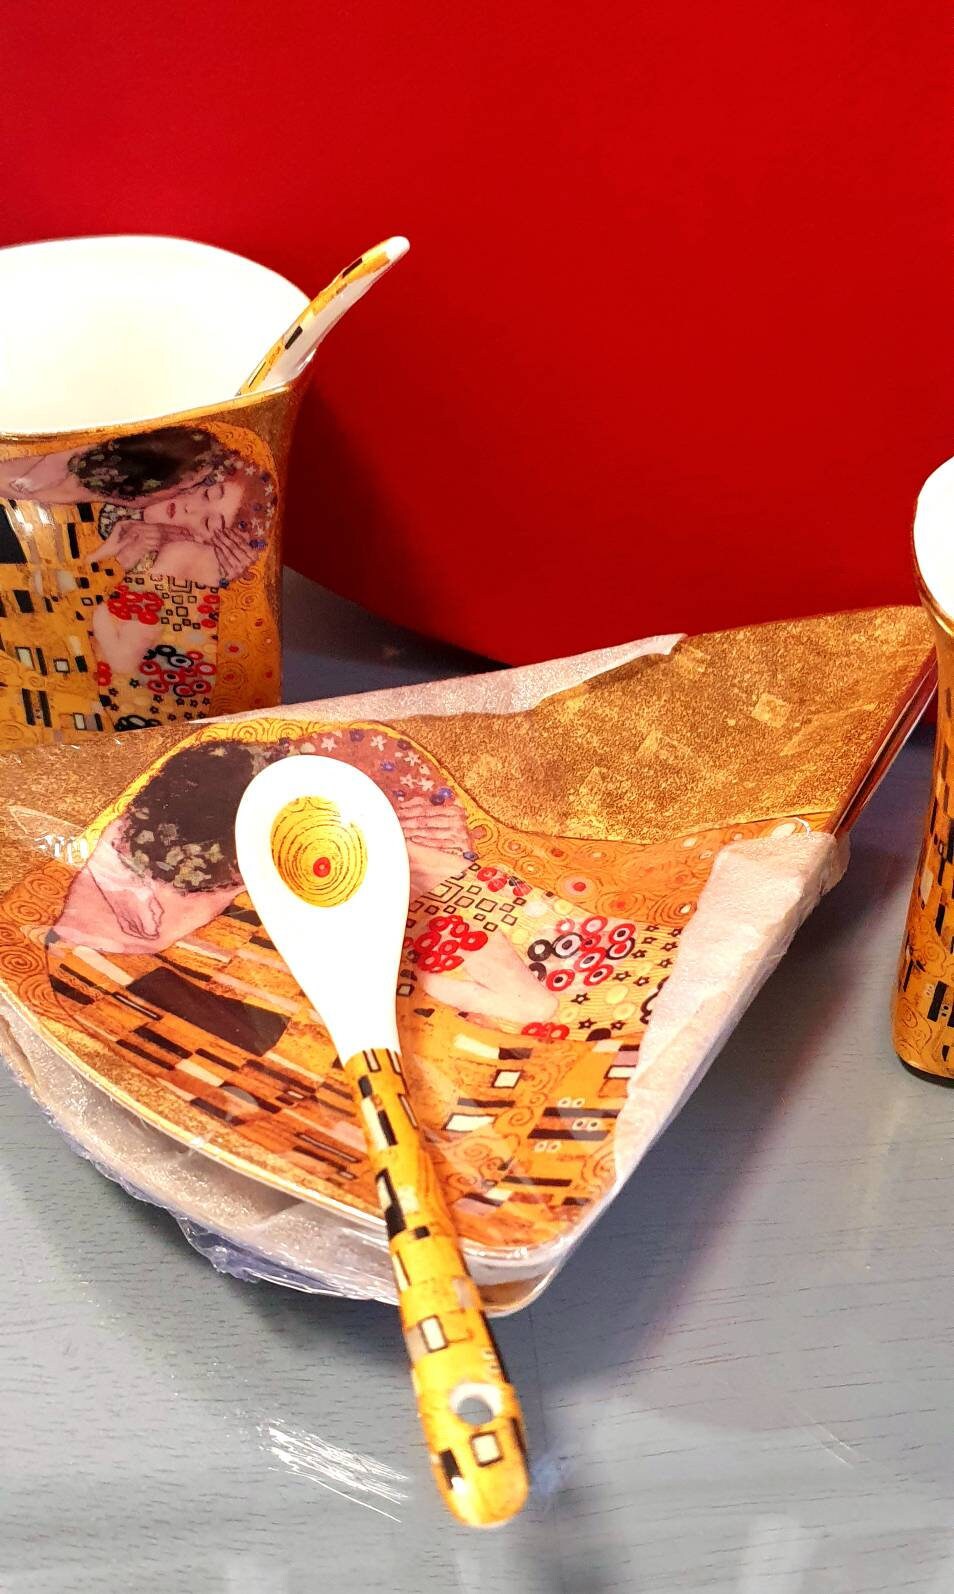 Très grand mug G.Klimt - Porcelaine des Pins